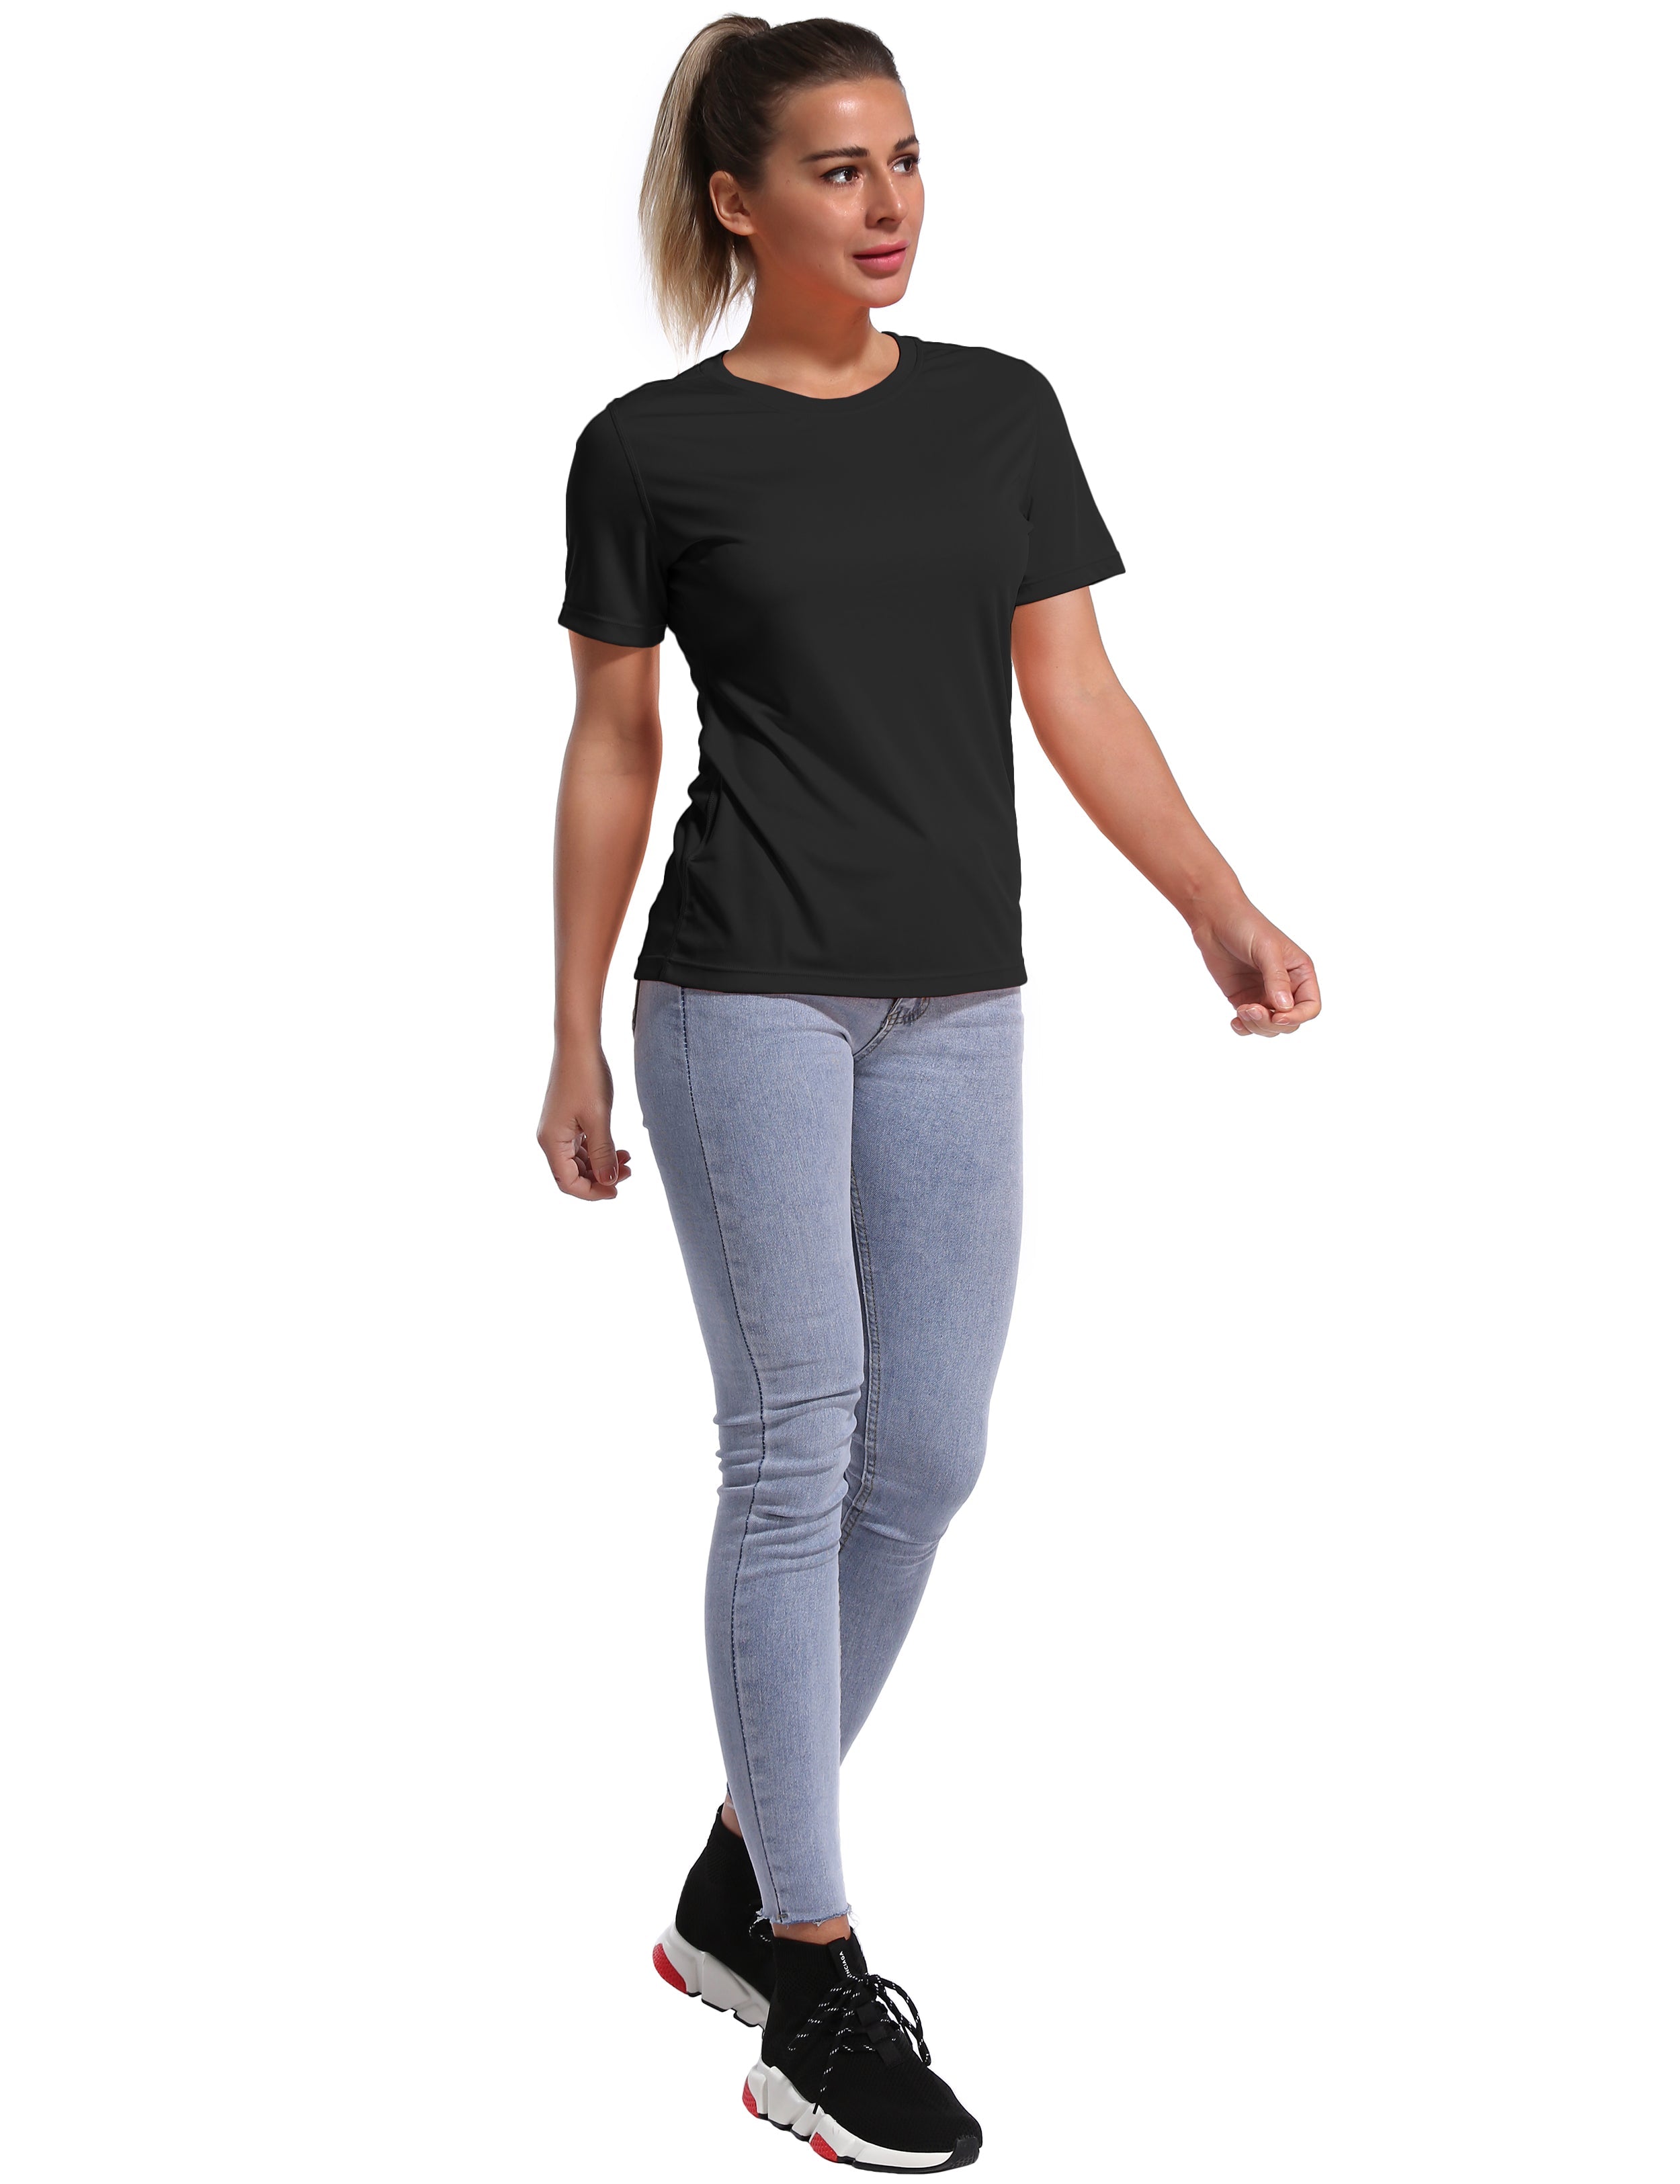 Short Sleeve Athletic Shirts black 100% polyester Lightweight Slim Fit UPF 50+ blocks sun's harmful rays Treated to wick moisture, dries ultra-fast